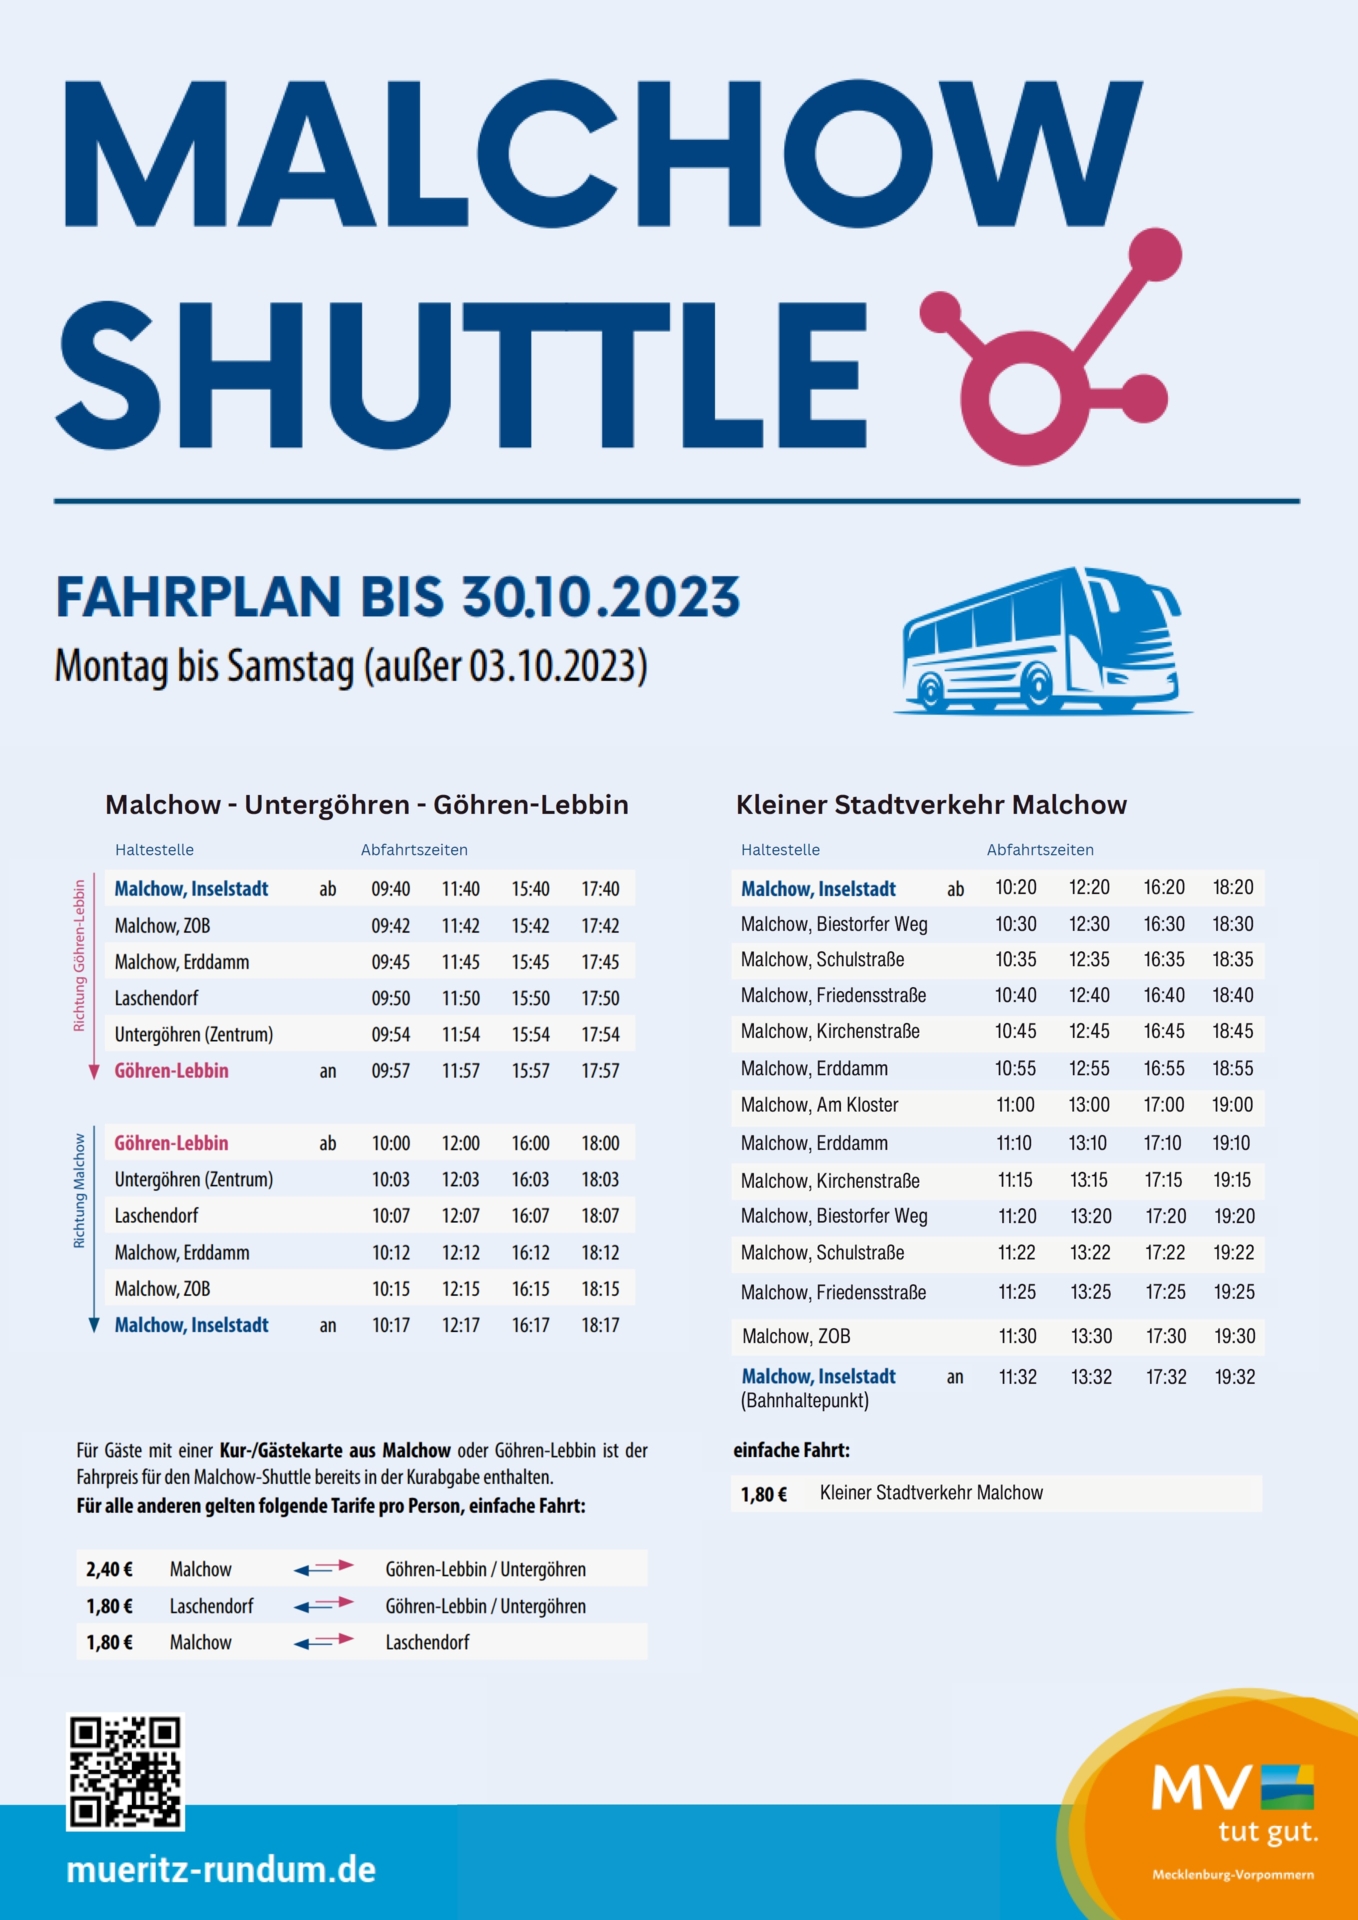 Malchow Shuttle + kl. Stadtverkehr 10-2023